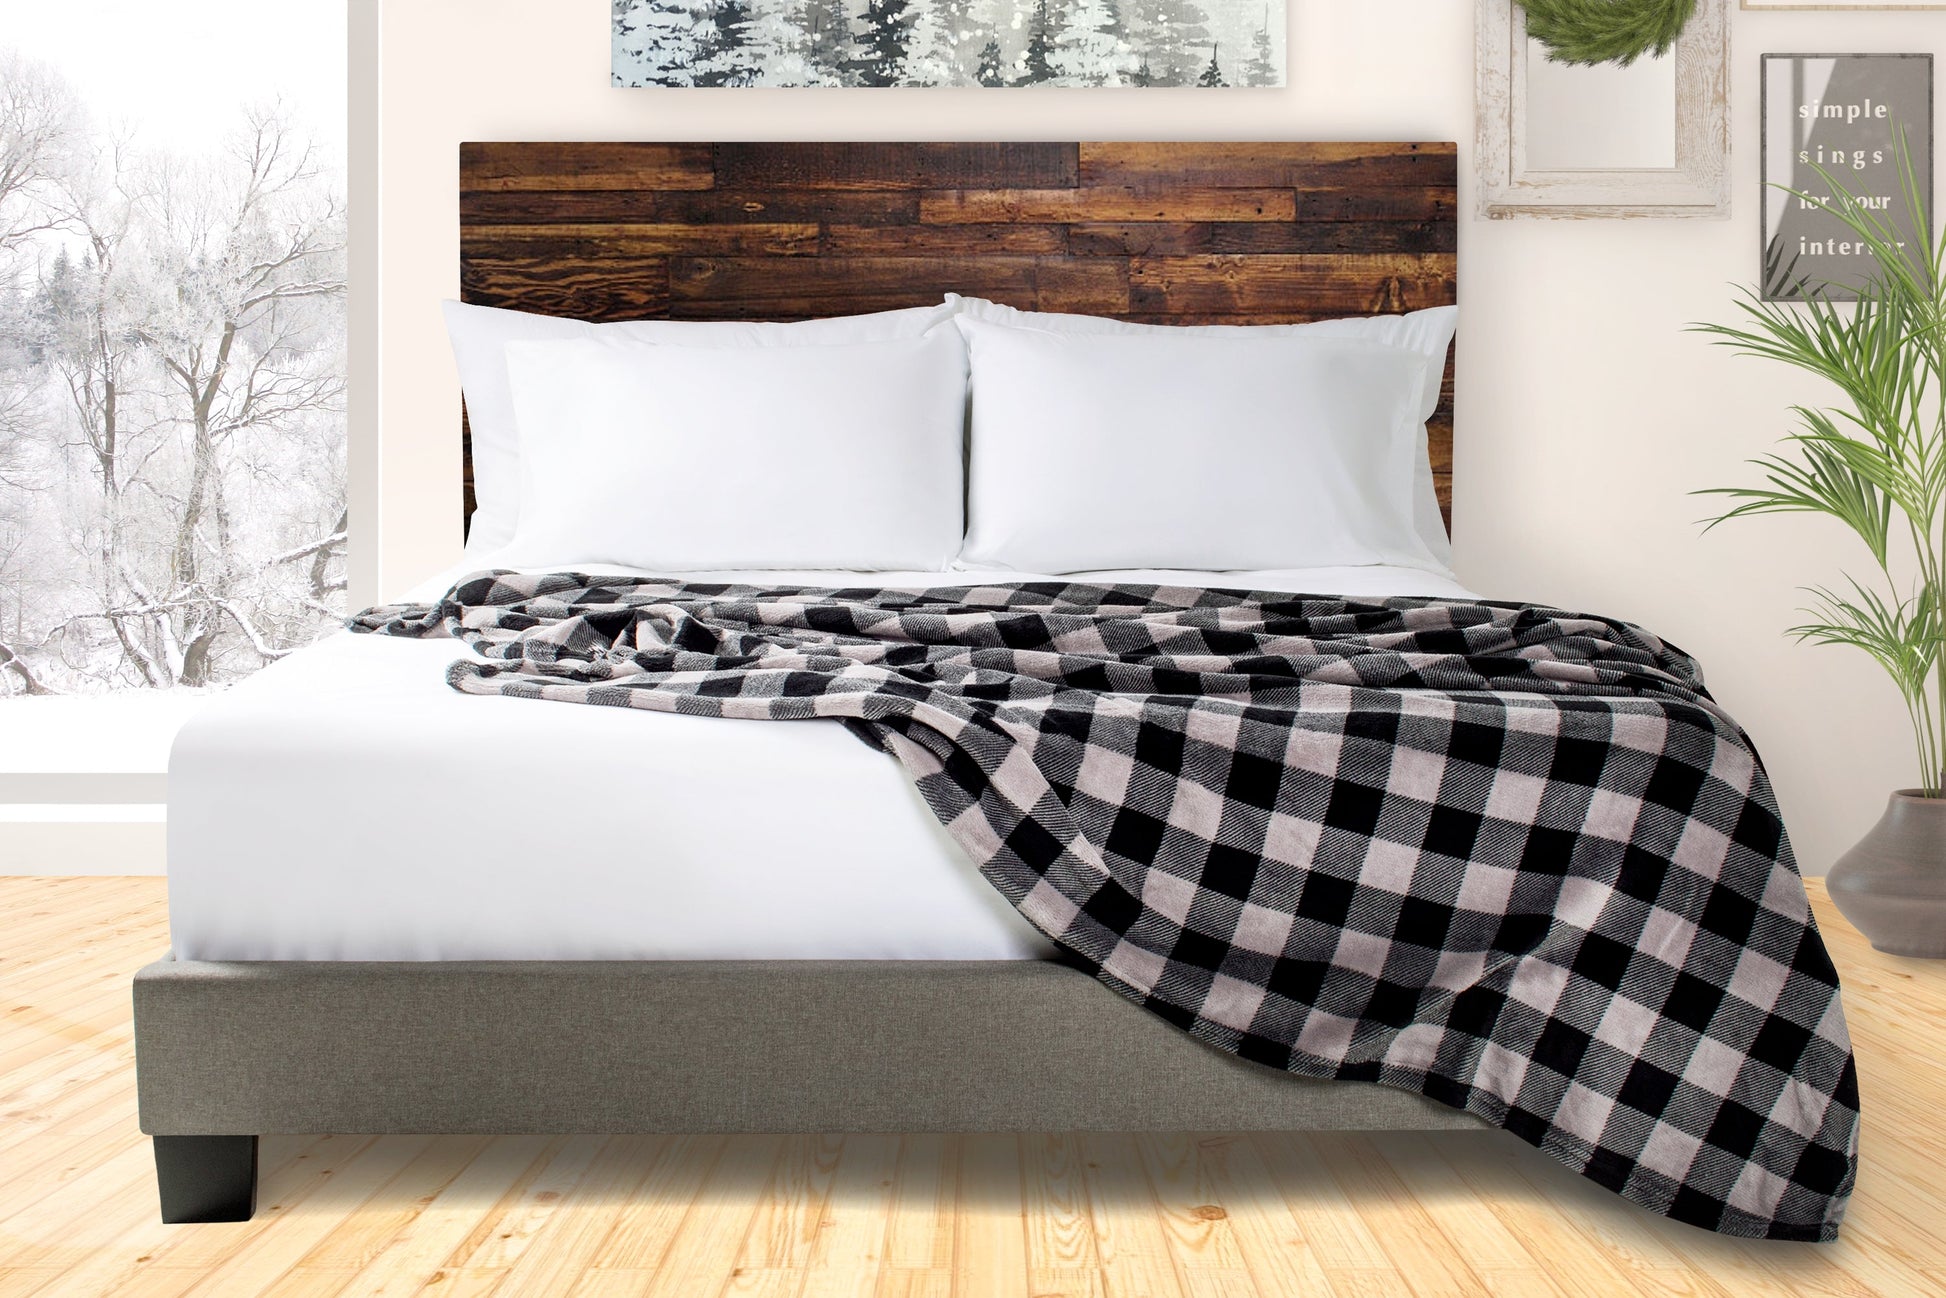 Super Soft Knit Blanket Throw Home Decor Bedding 60X80 Grey